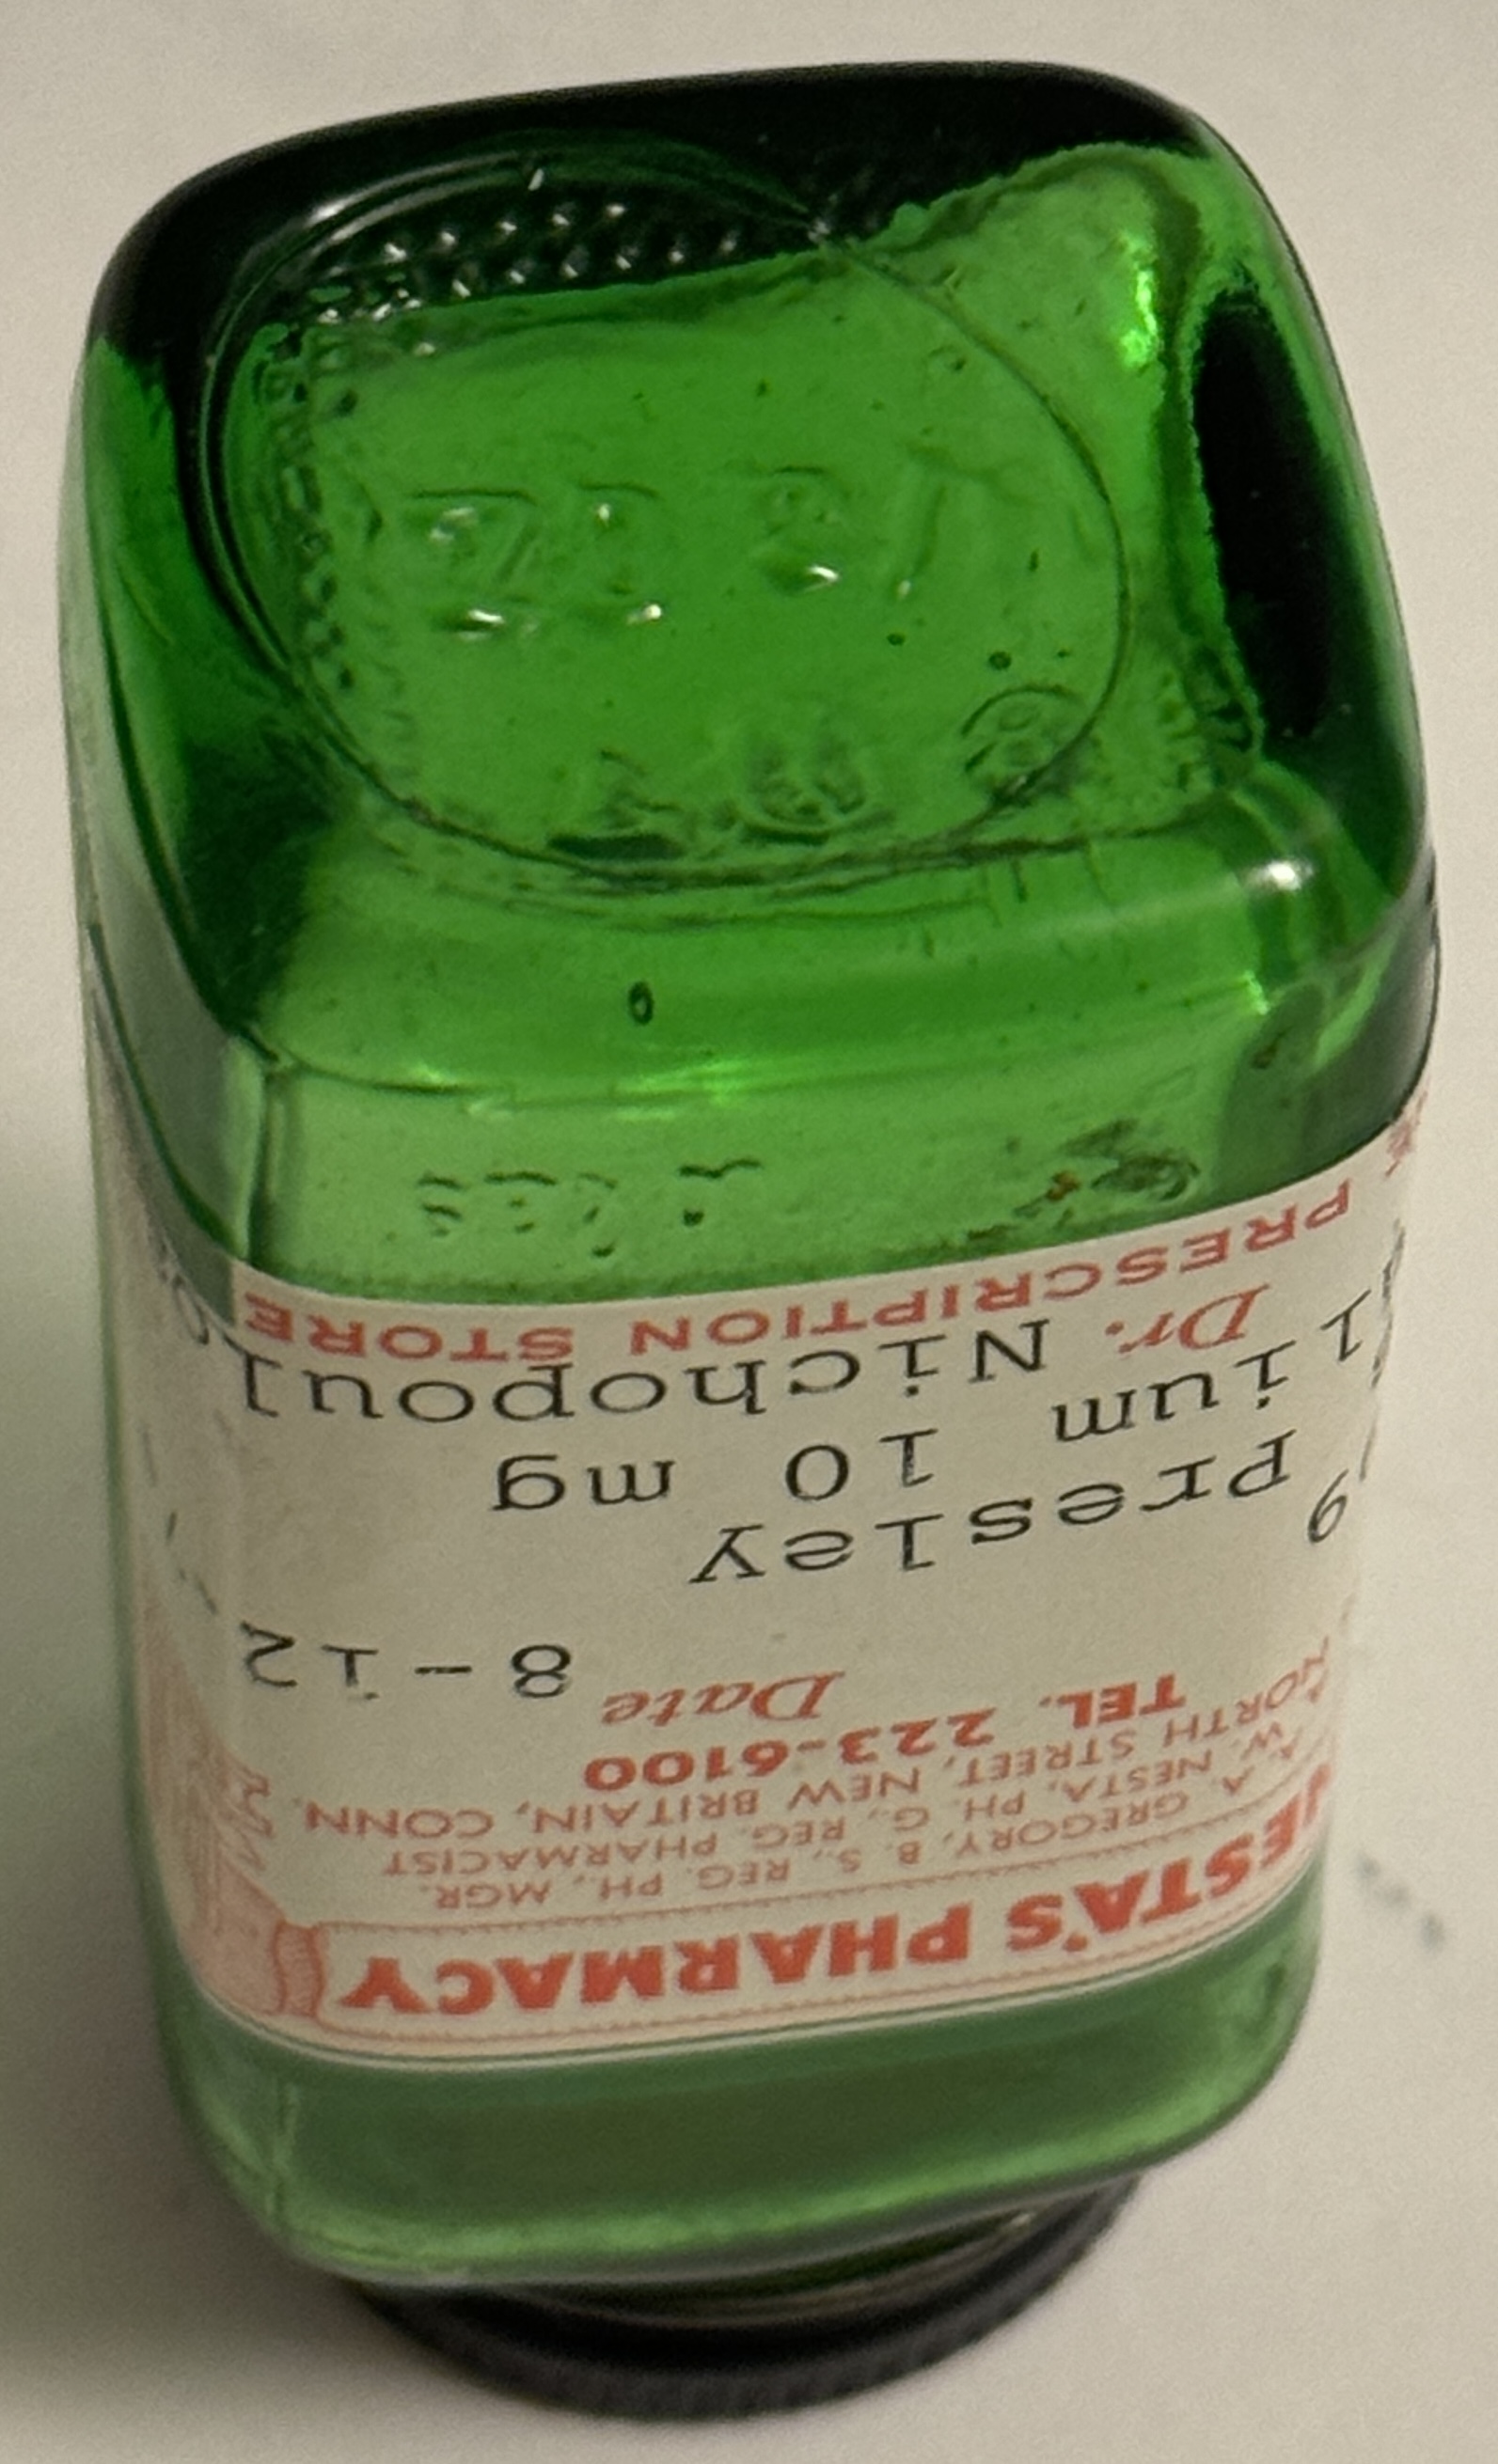 Elvis Presley Valium prescription bottle - Image 7 of 7